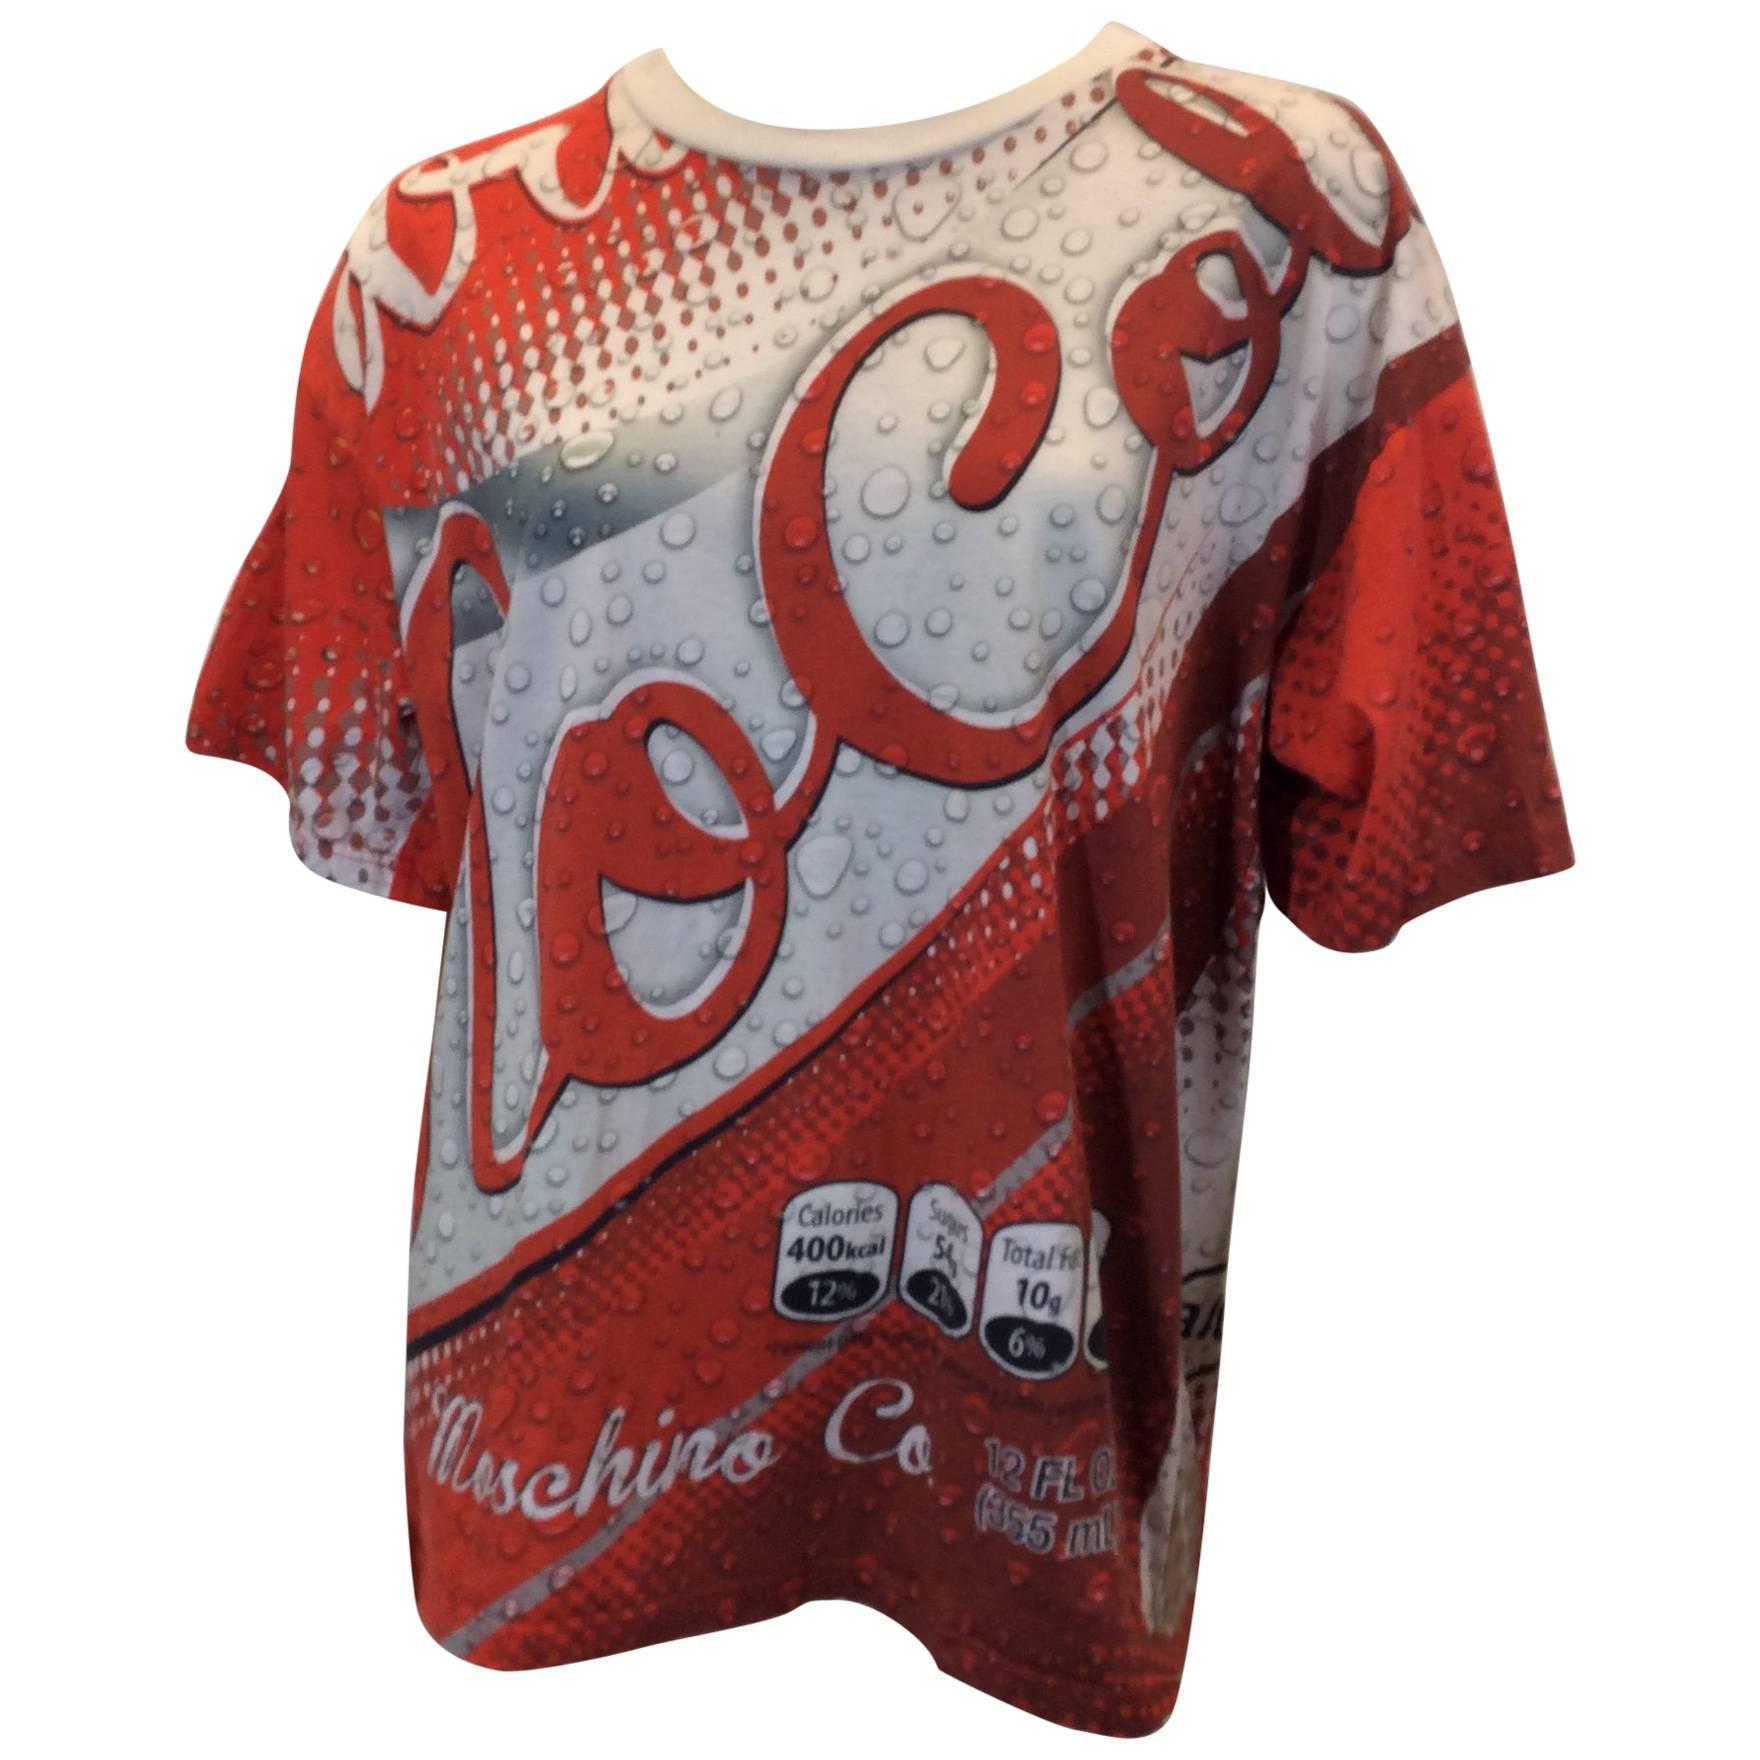 Moschino Coca Cola T-Shirt For Sale